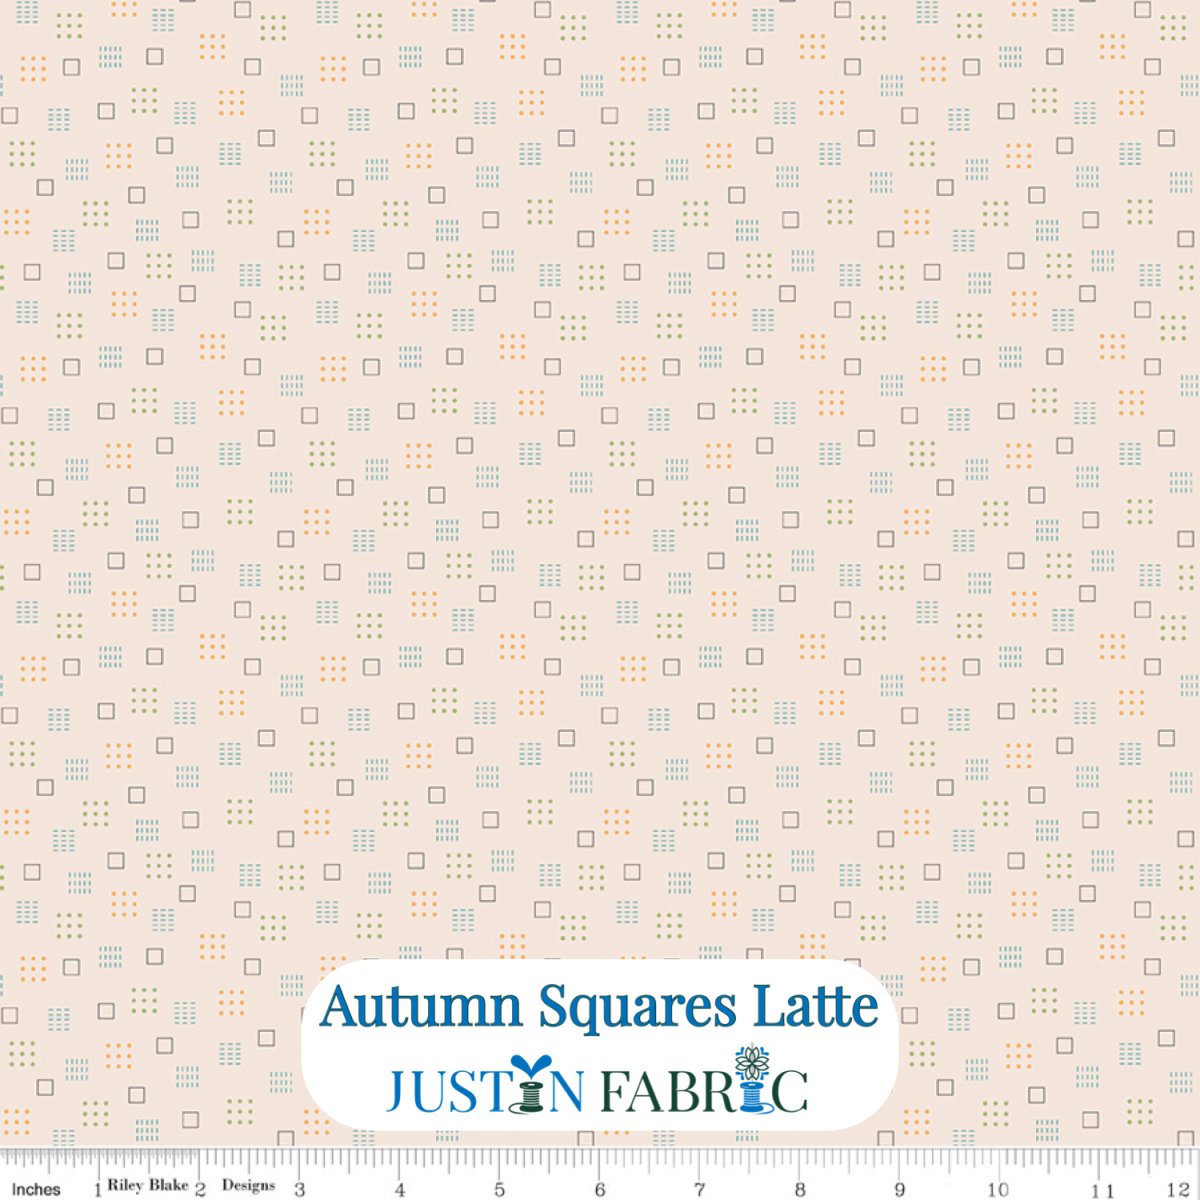 Autumn Squares Background Latte Cotton Yardage by Lori Holt | Riley Blake Designs -C14653-LATTE - Justin Fabric!